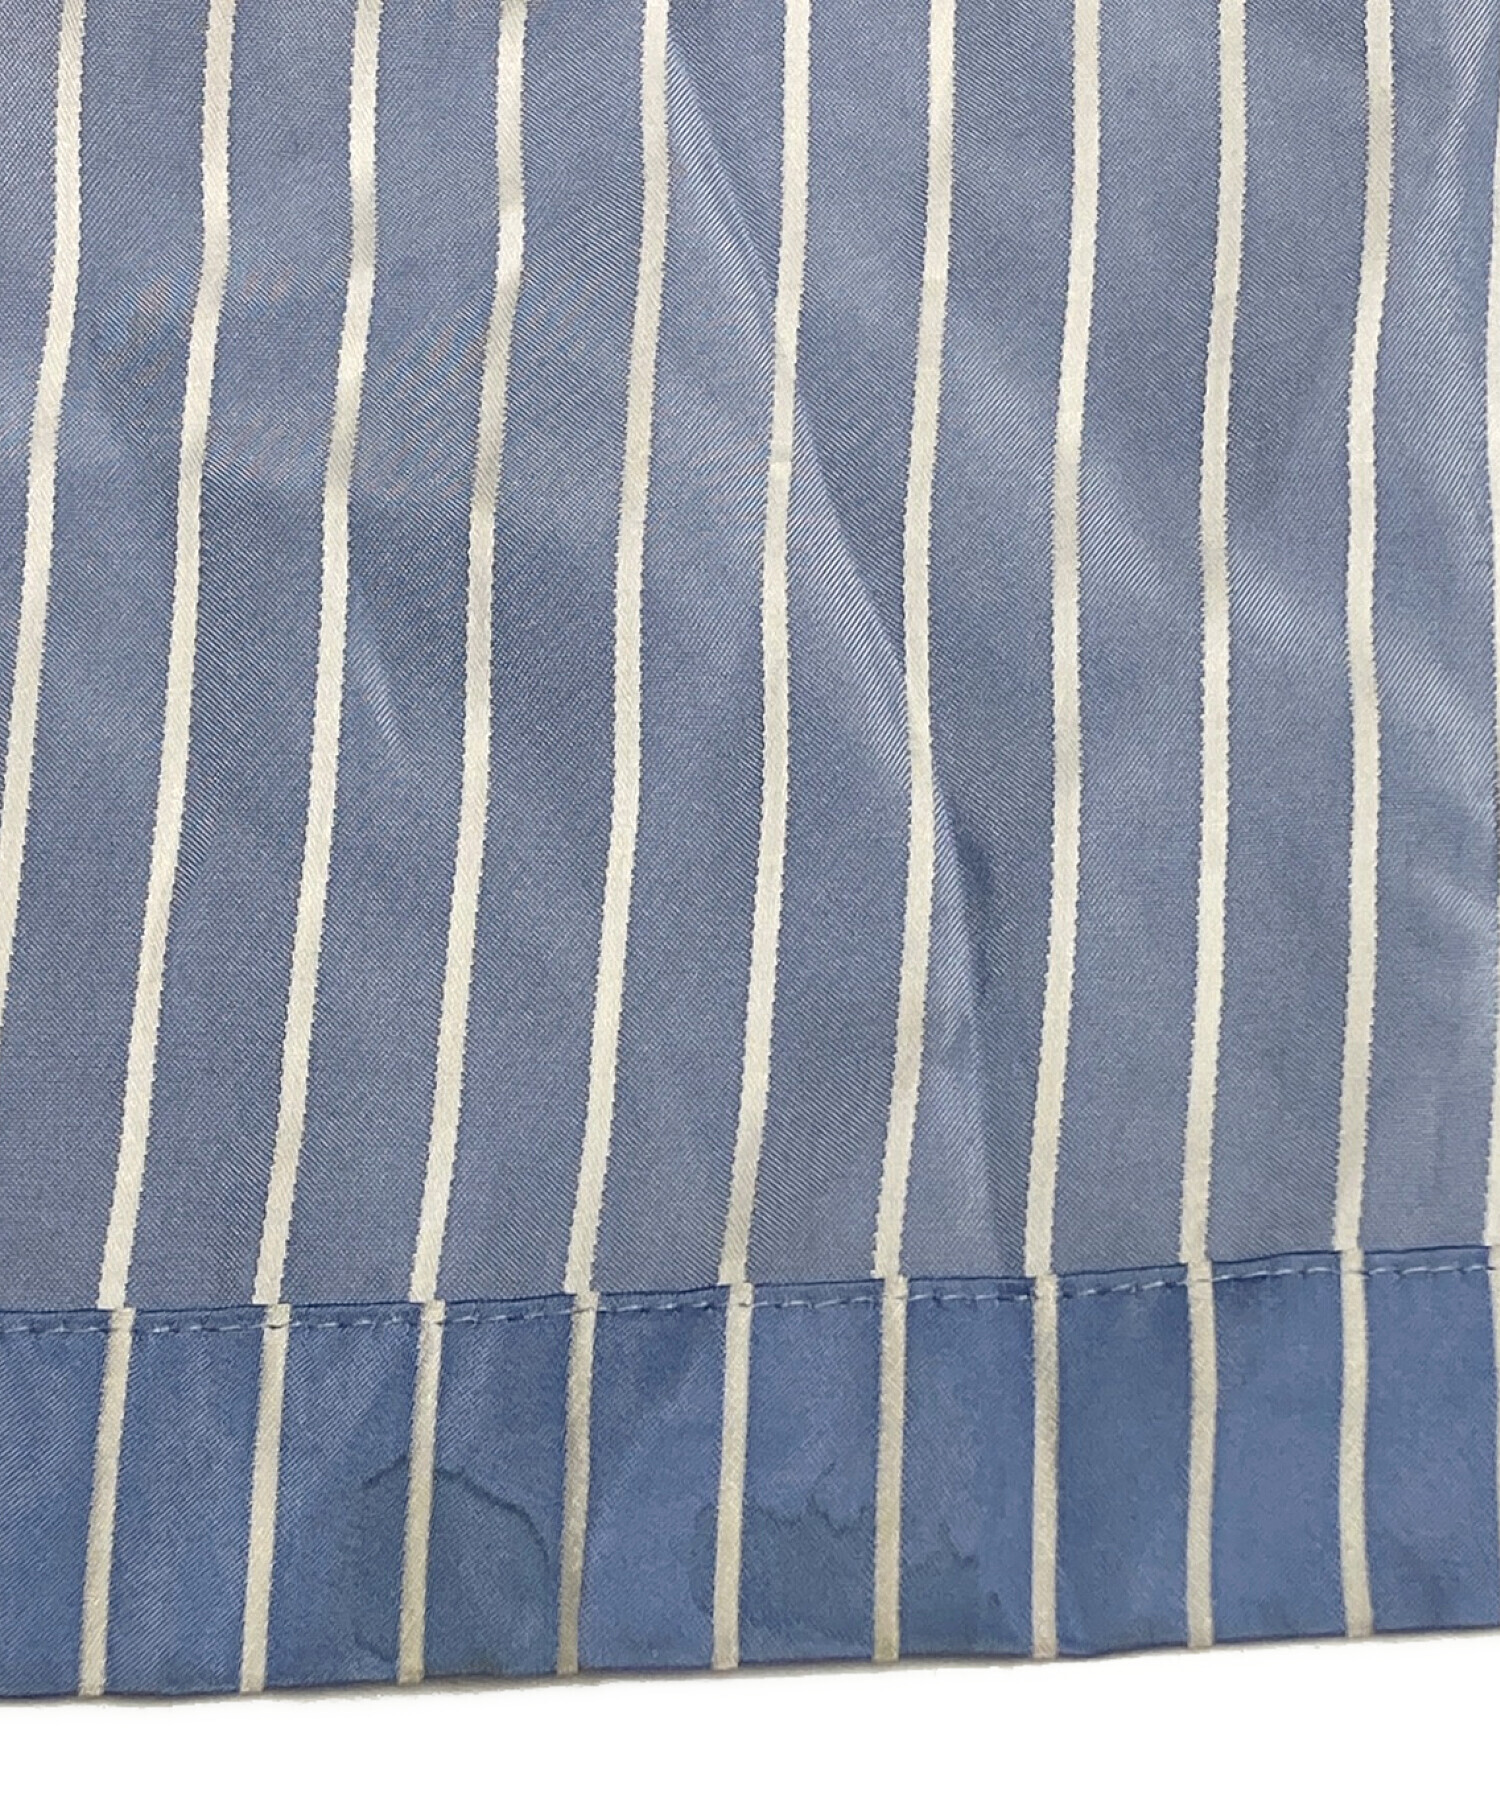 MYLAN マイラン Bi-color stripe shirt dress試着のみです